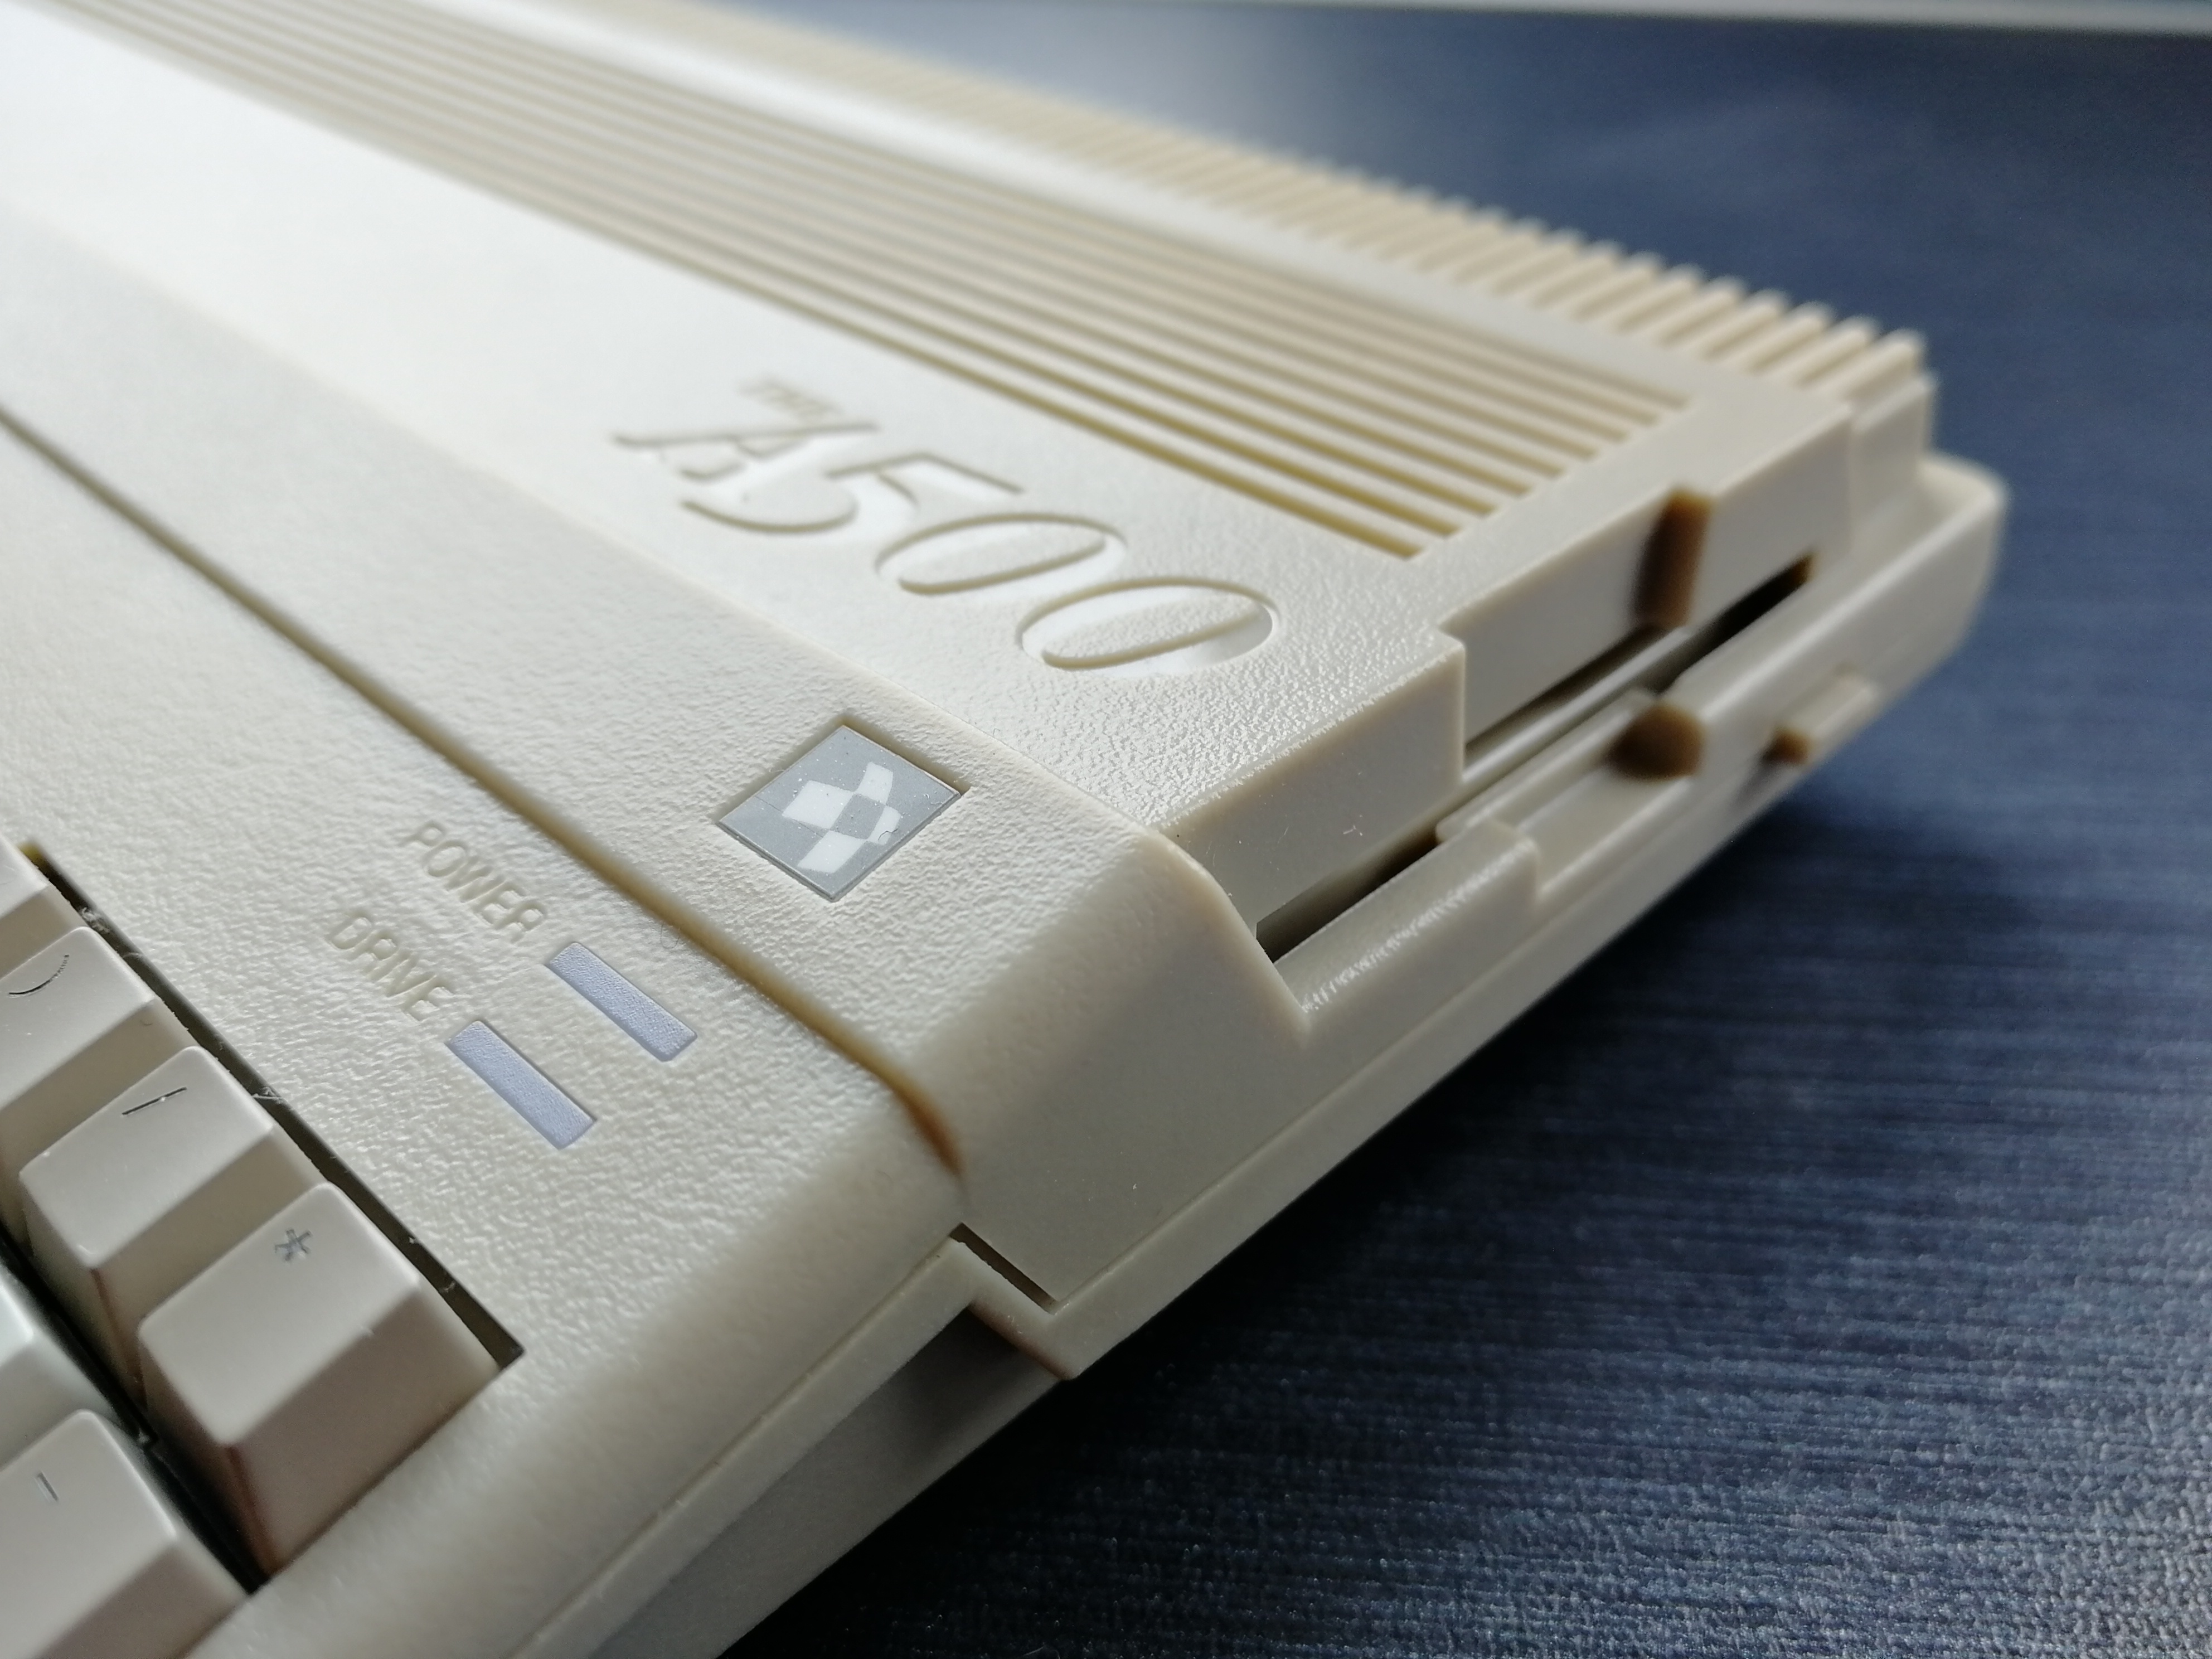 Amiga A500 Mini Review - Hits and Misses